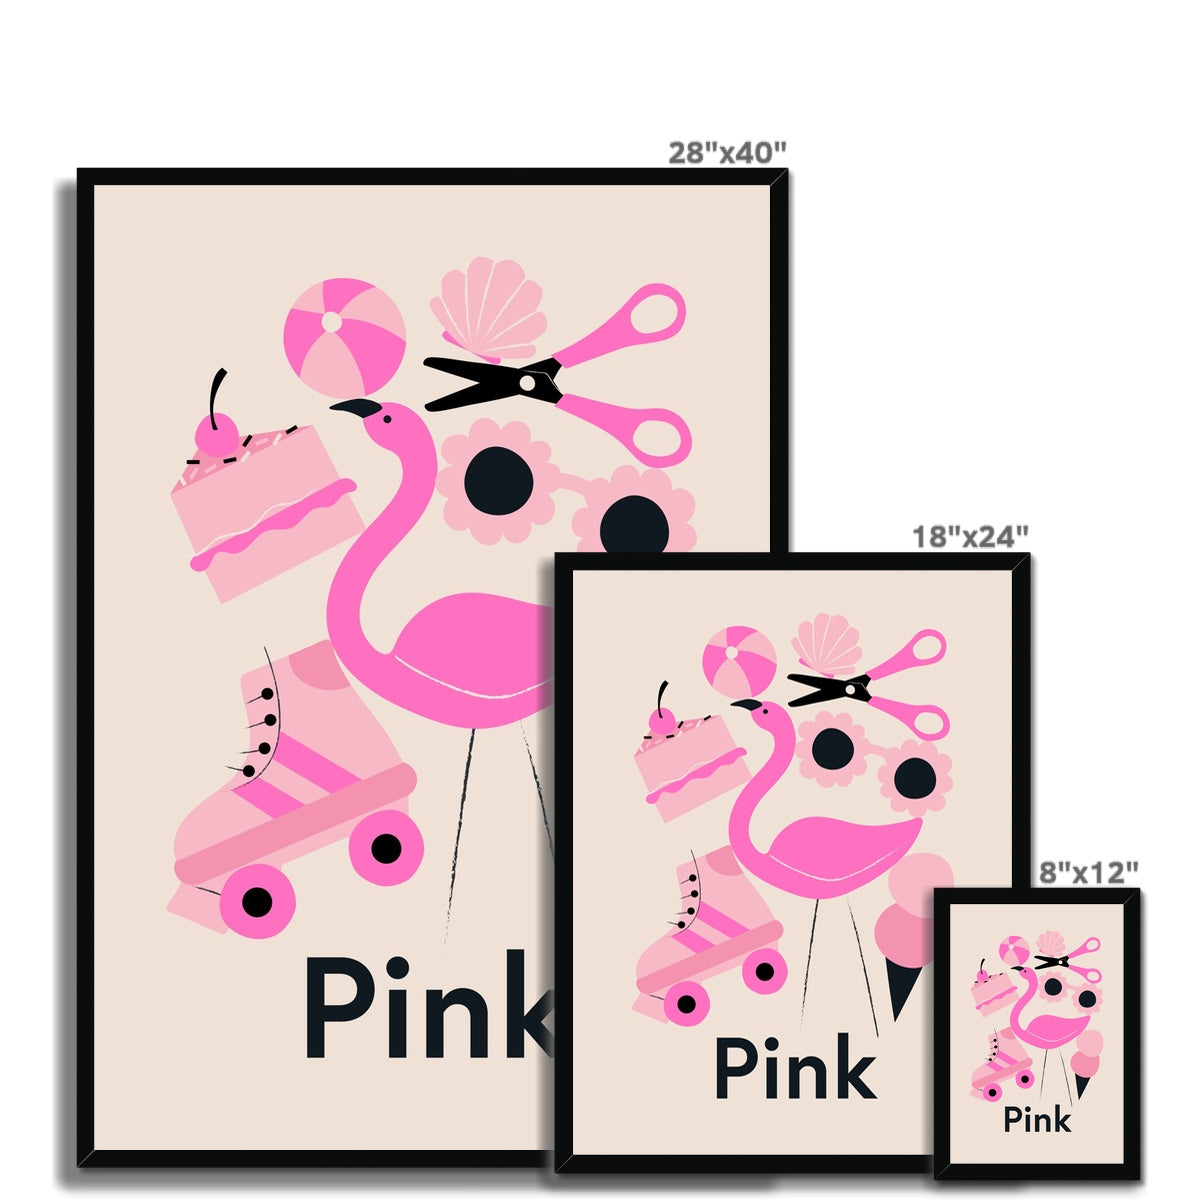 Favourite Colour Pink Framed Fine Art Print